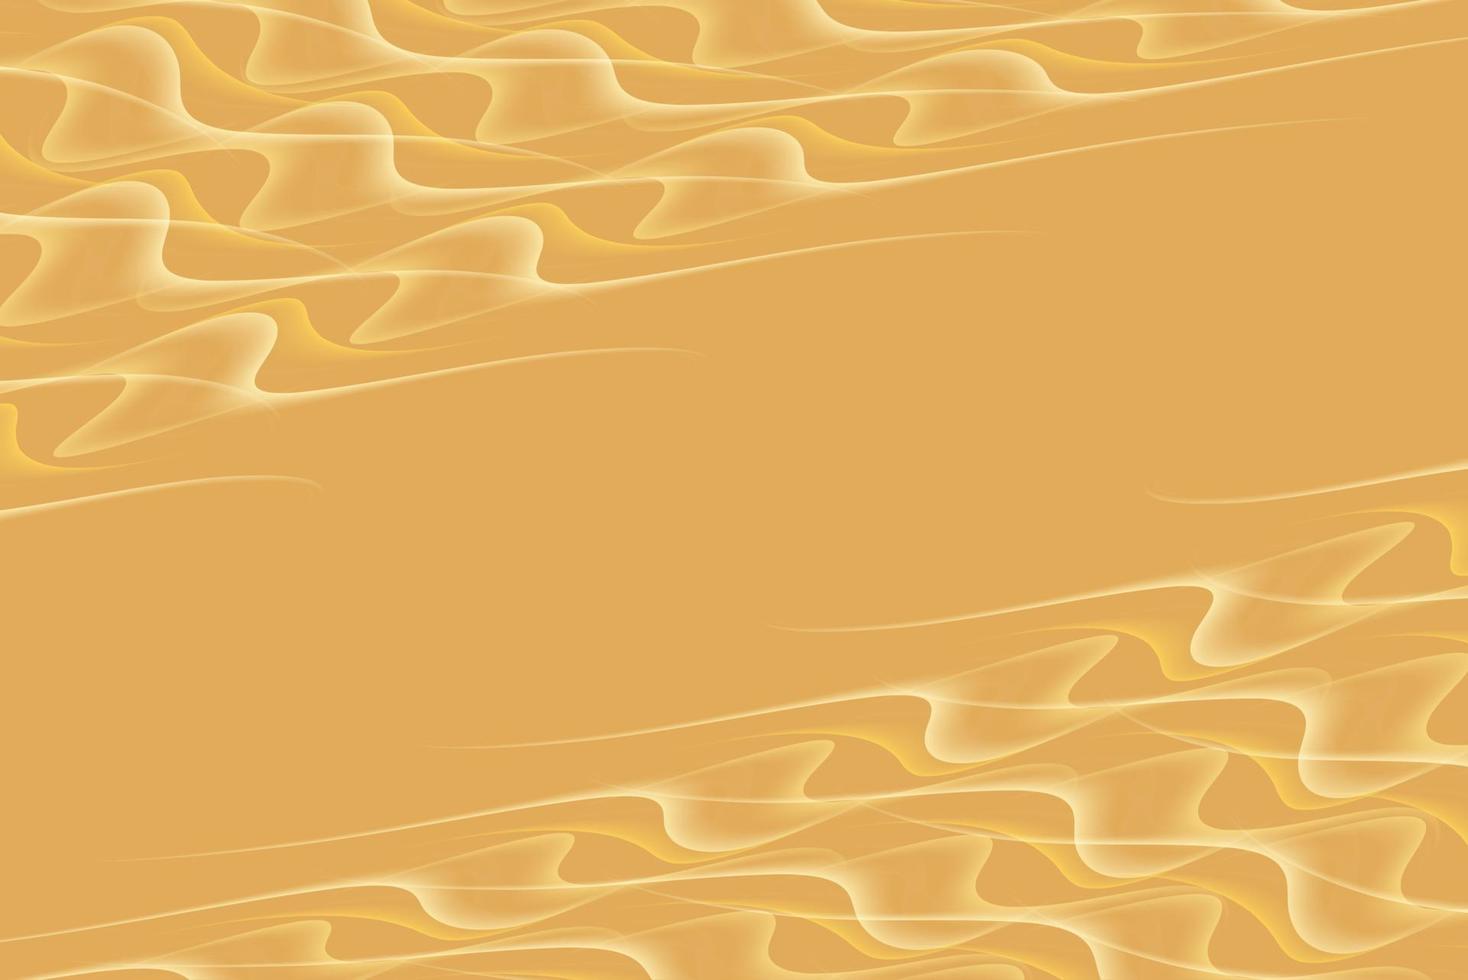 abstrakt orange bakgrund med geometrisk former mönster. vektor illustration